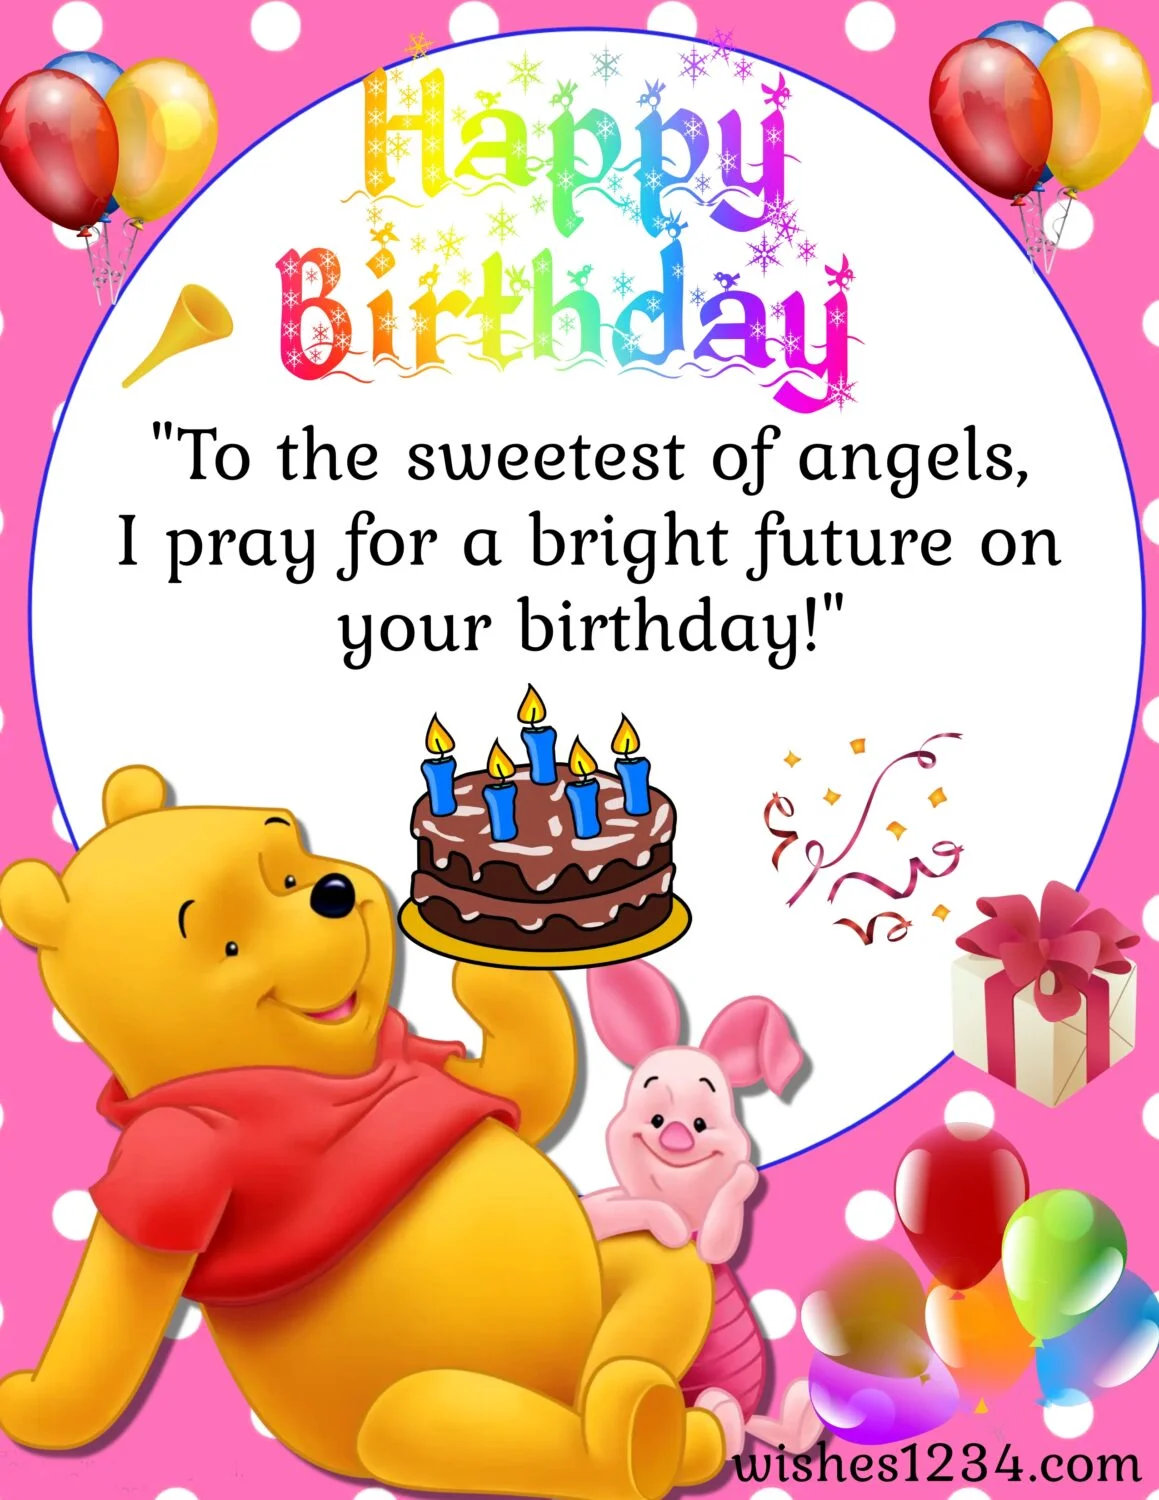  Winnie the Pooh with cake, Kids birthday | Happy Birthday wishes for kids.